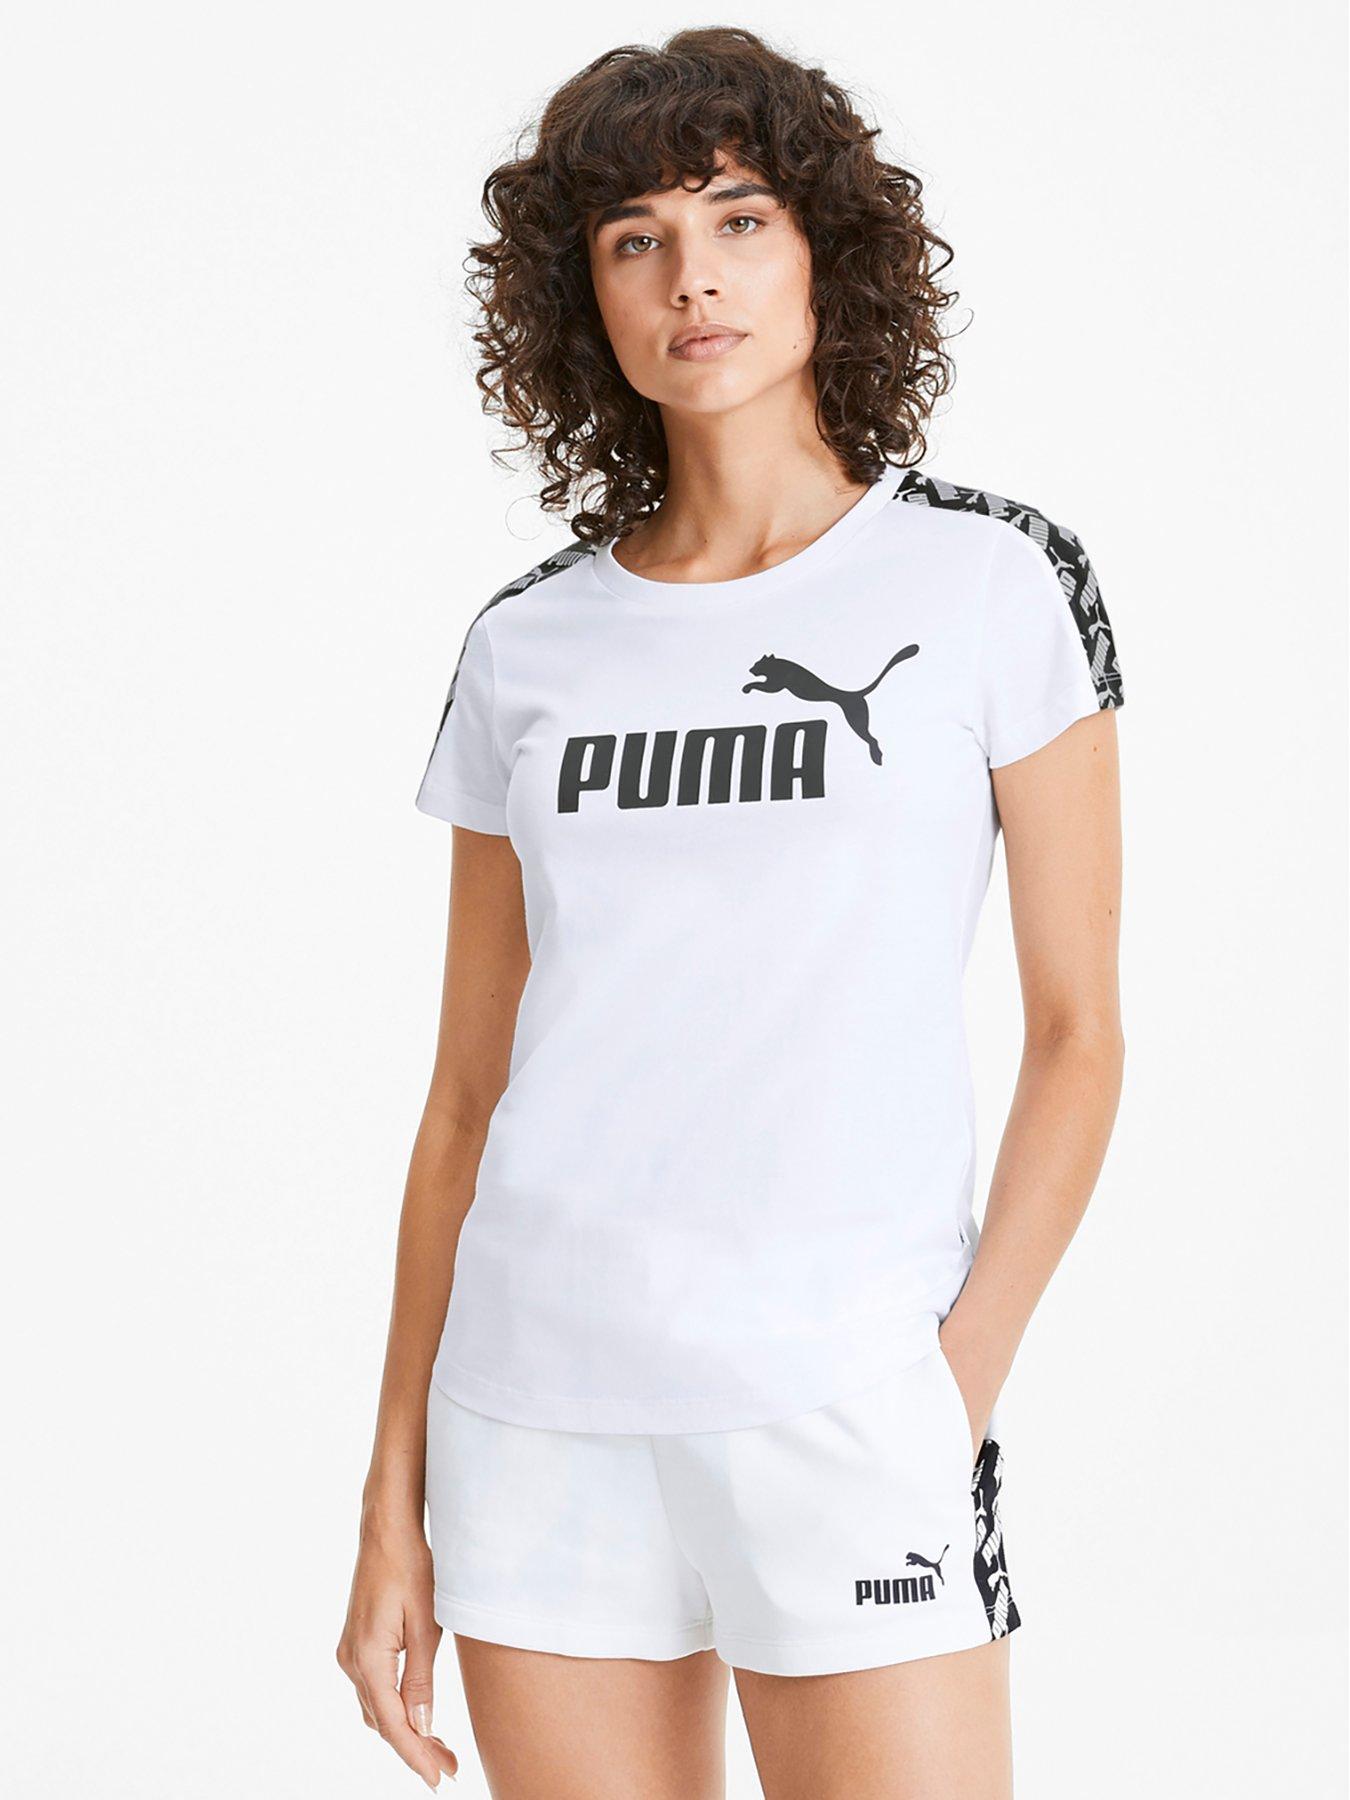 puma shirts & tops